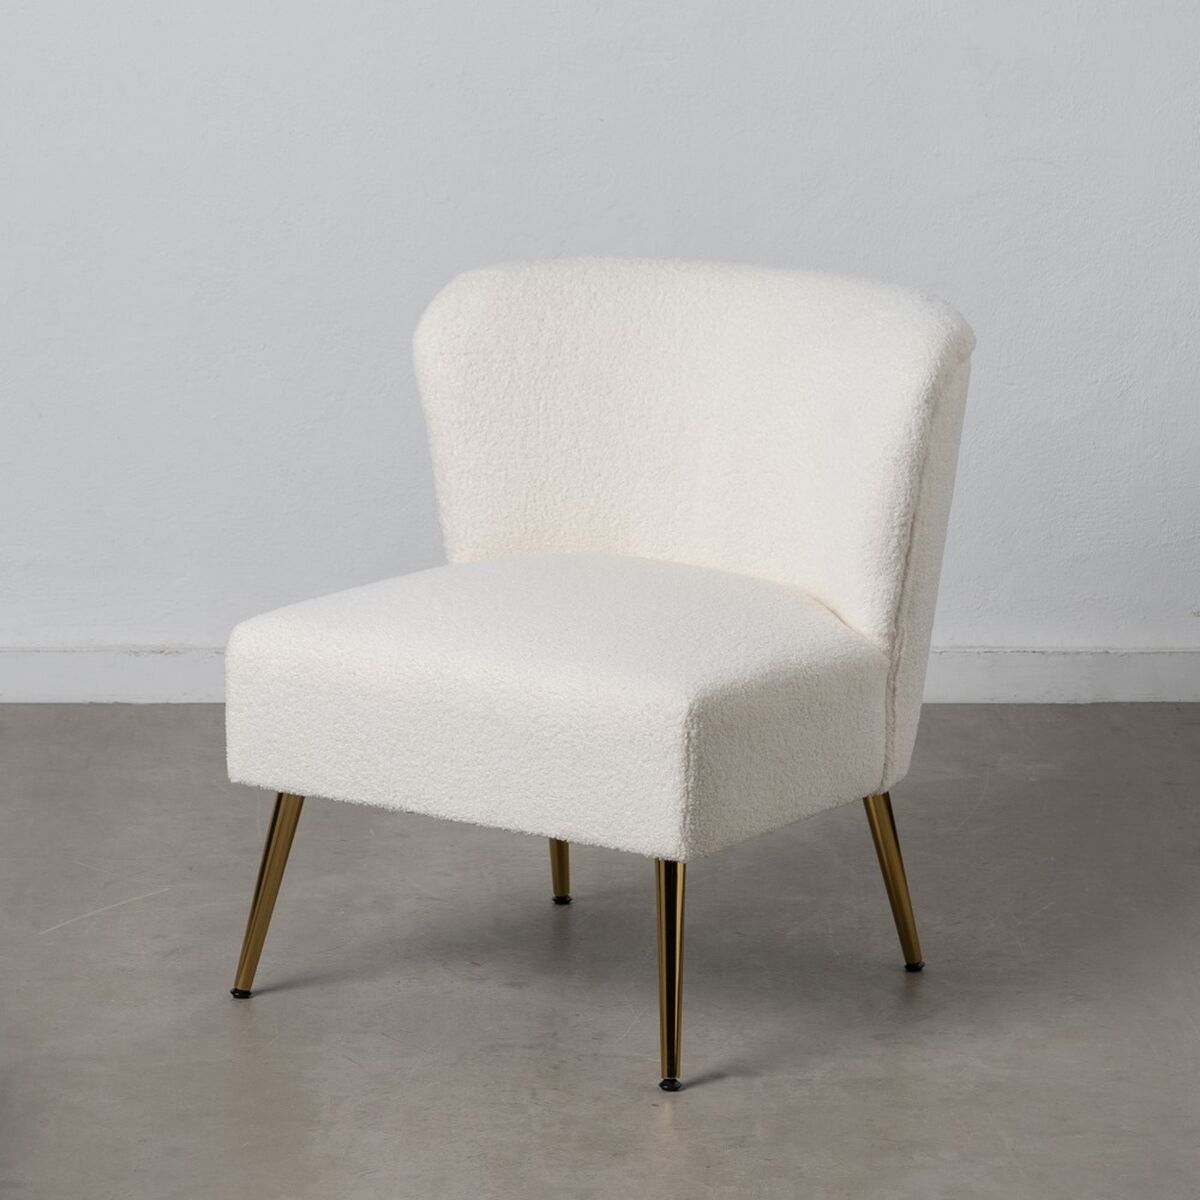 White Armchair with Golden Metal Legs (66 x 65 x 72 cm)